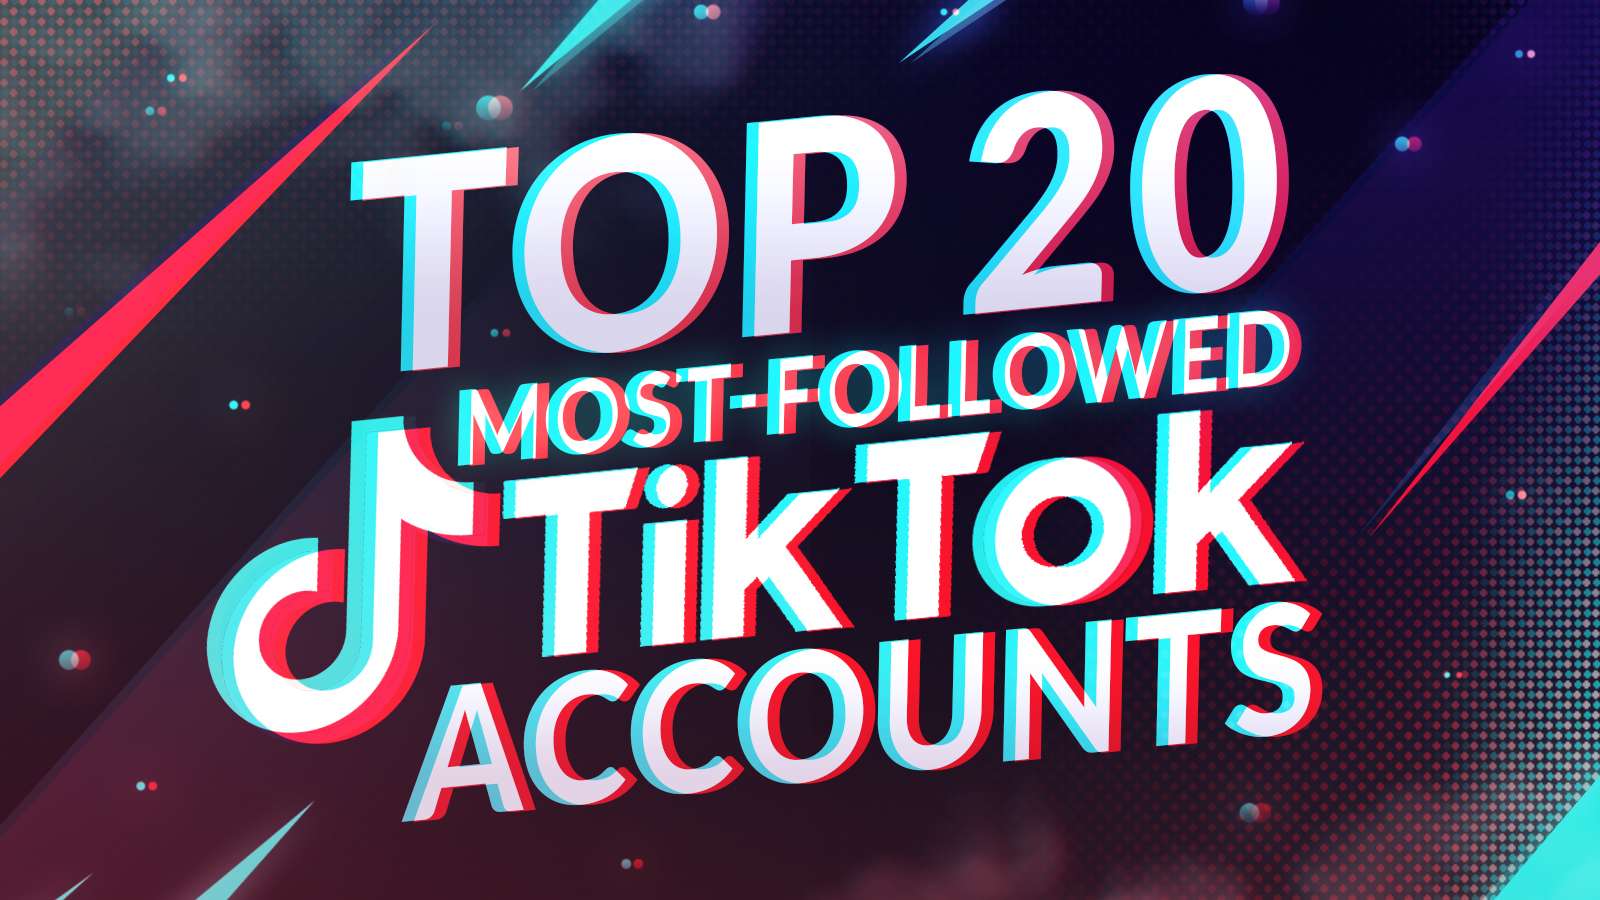 Top 20 most followed TikTok accounts